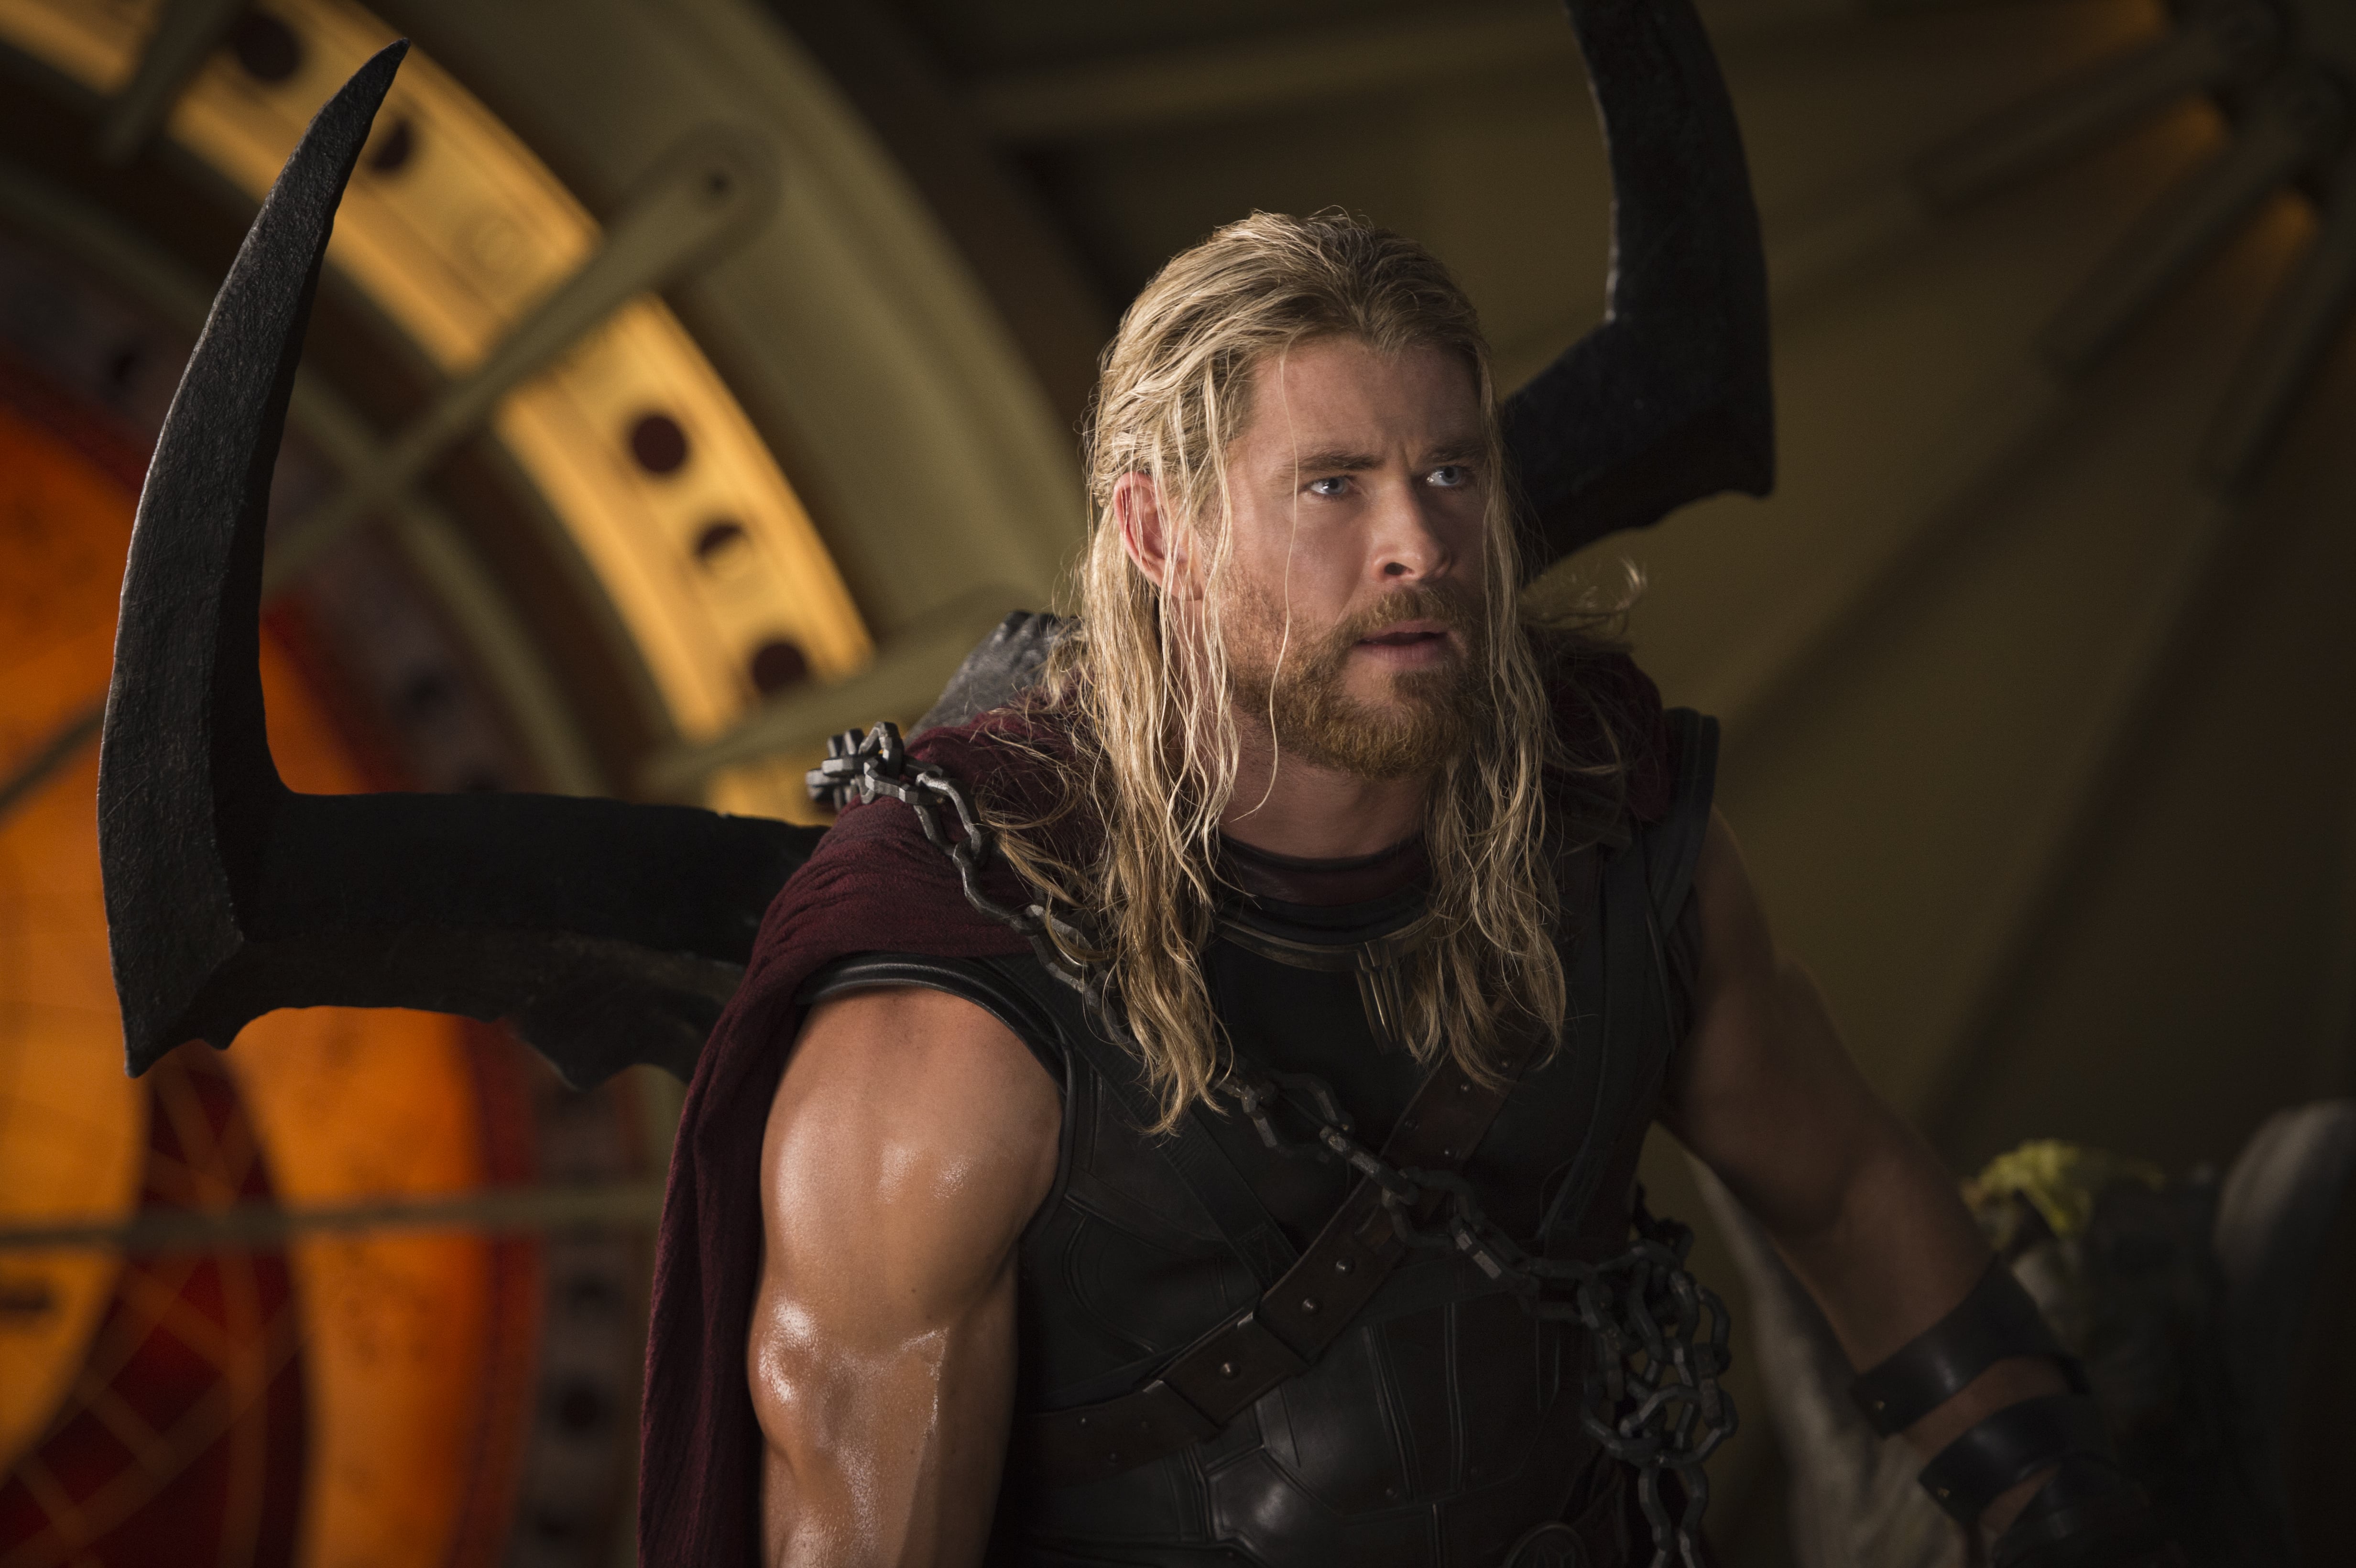 Marvel Studios - The casts of Thor Ragnarok and Black